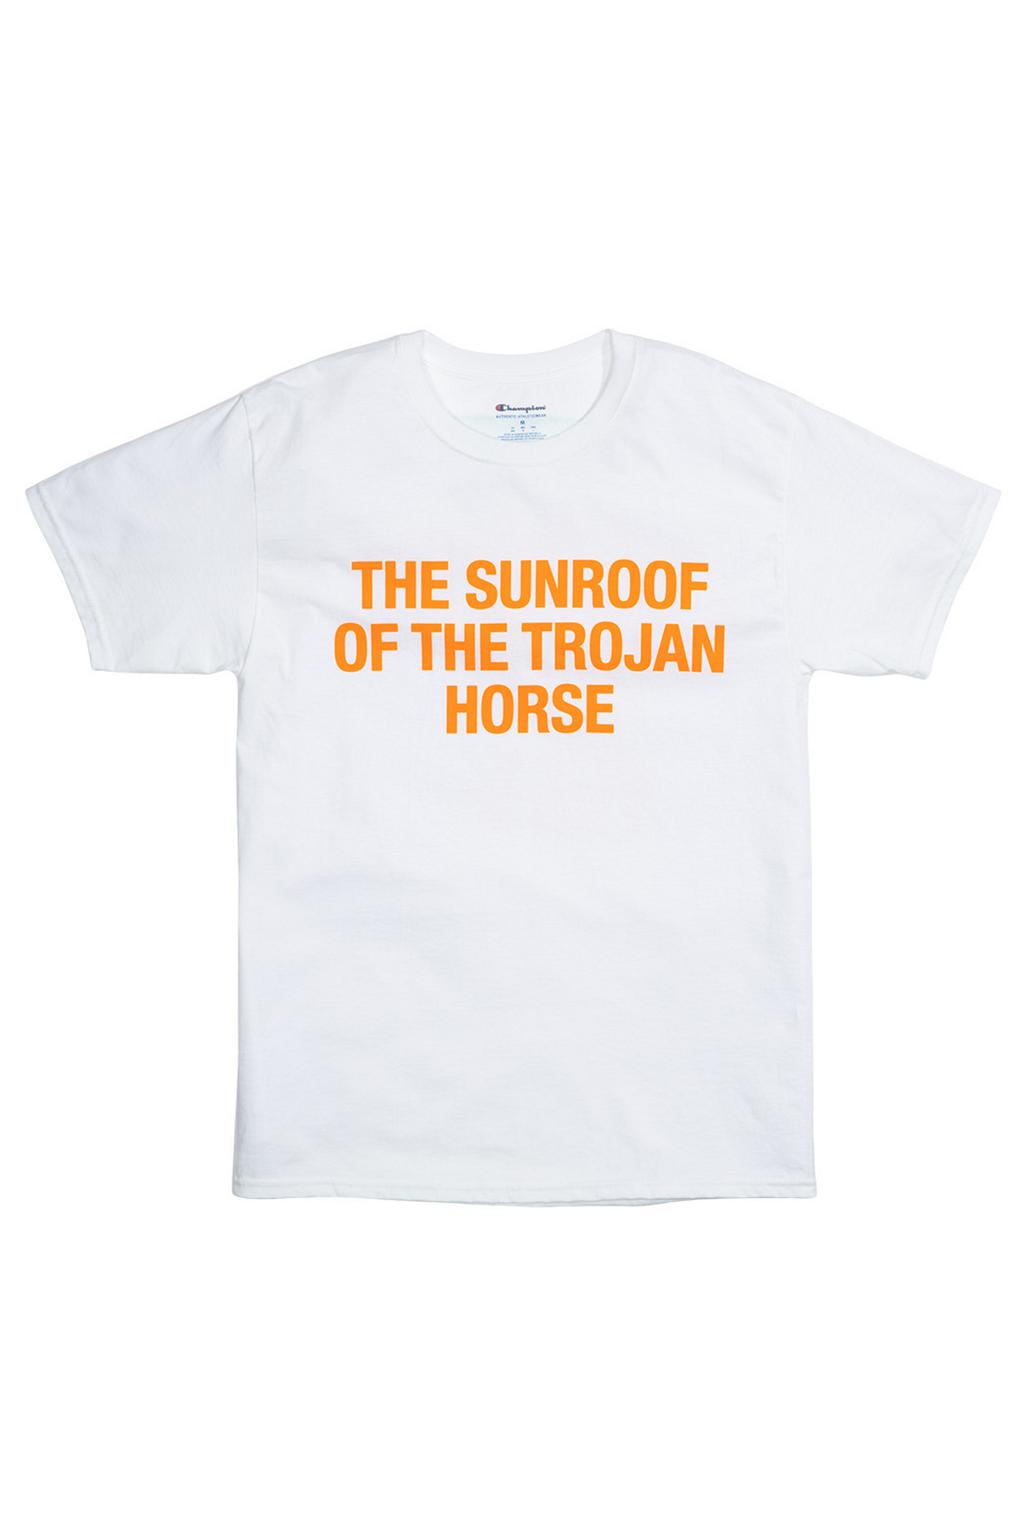 Virgil Abloh Brooklyn Museum Sunroof Trojan Horse T-shirt White - Sole Cart